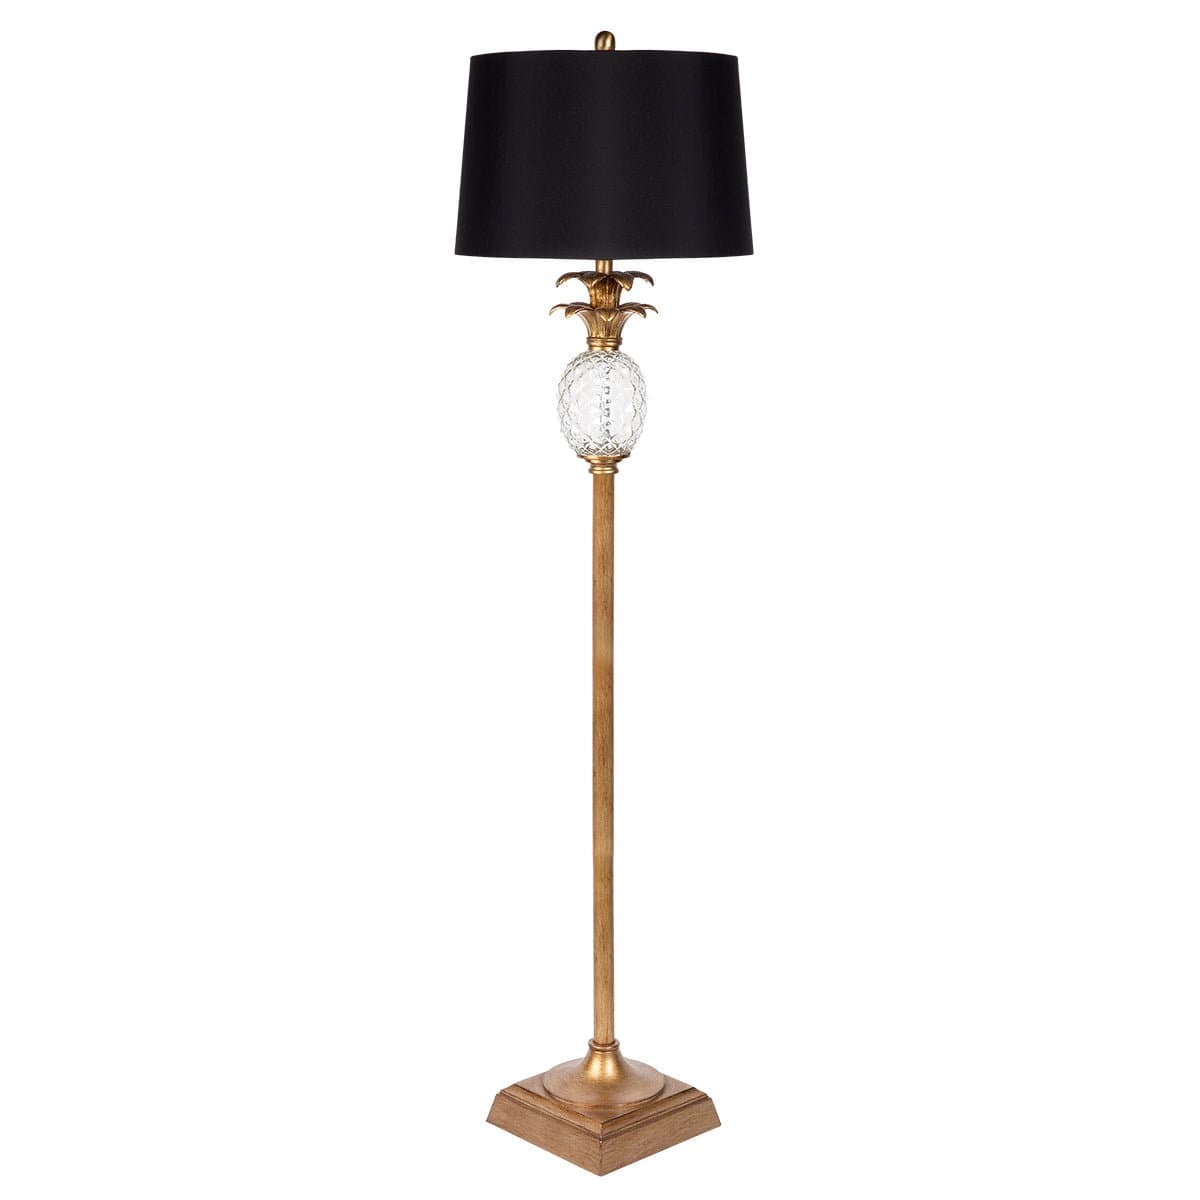 CAFE LIGHTING & LIVING Lighting Langley Floor Lamp - Antique Gold 11618